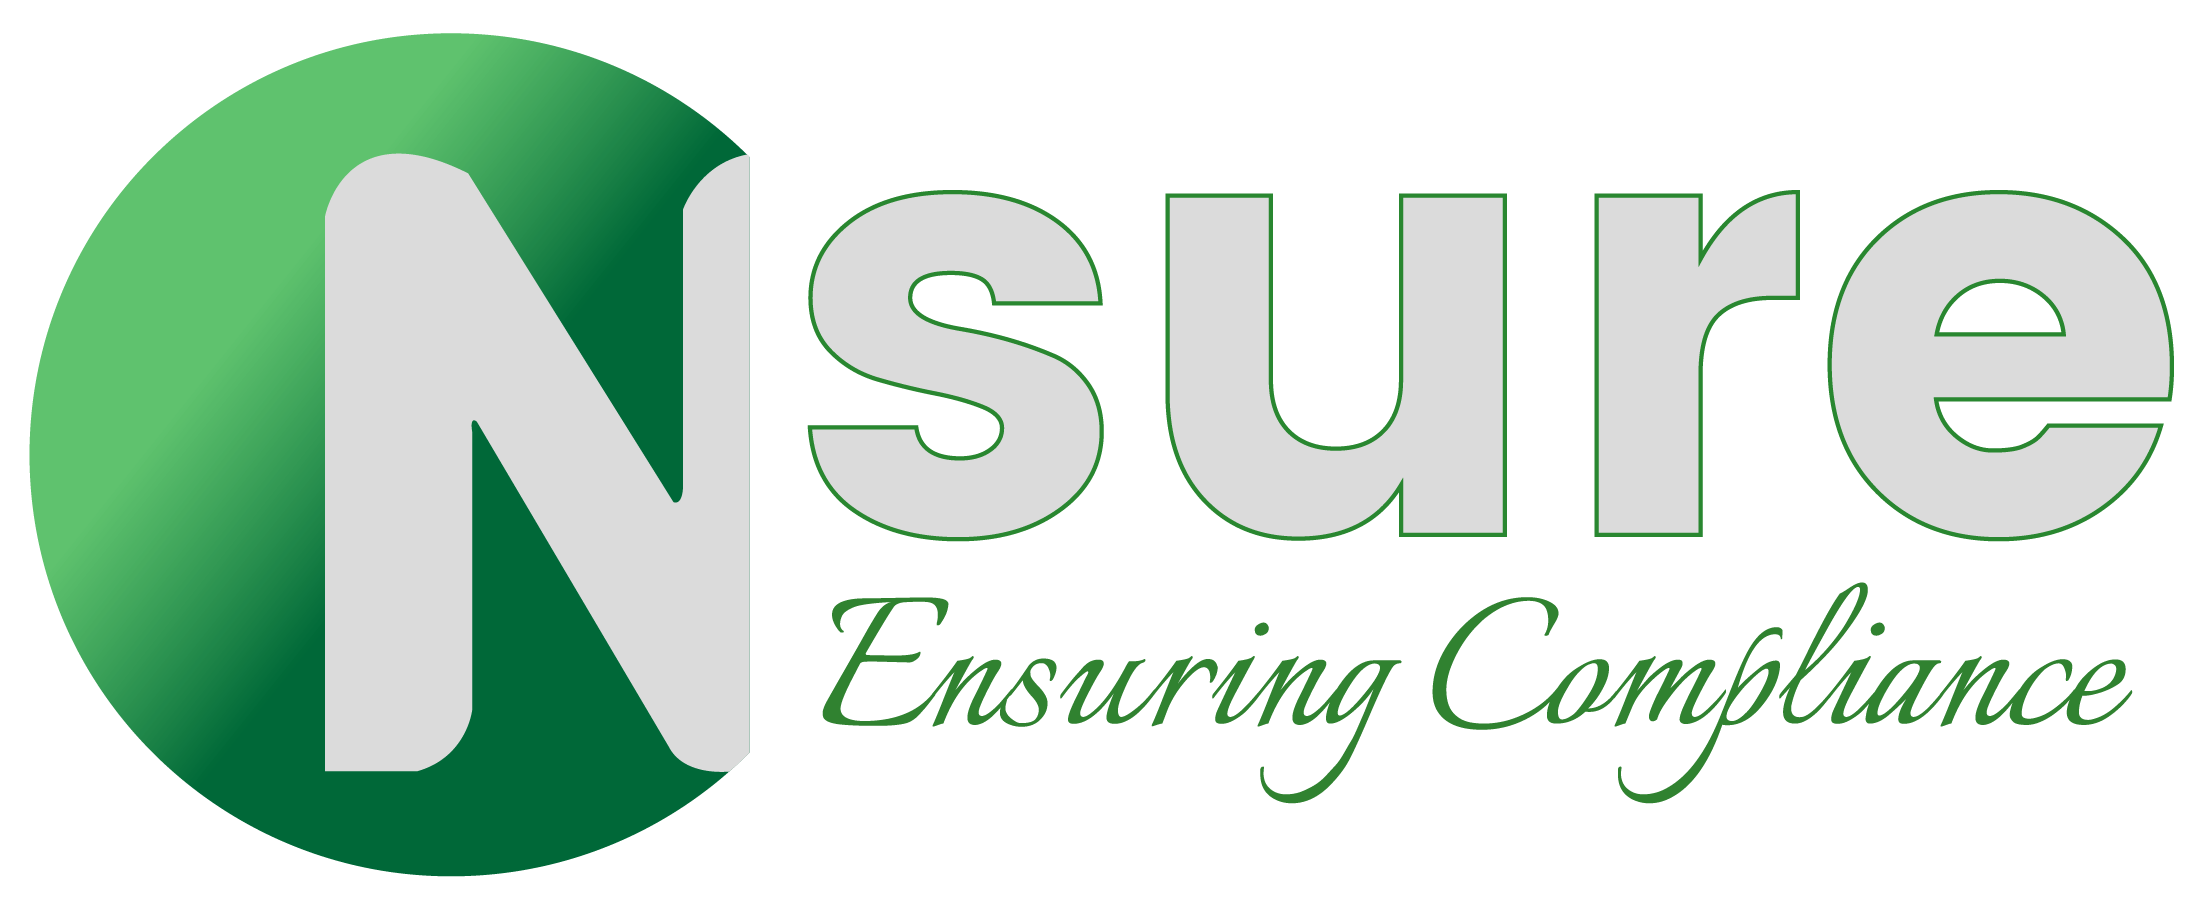 Ensure Quality & Standardization Consultants Logo